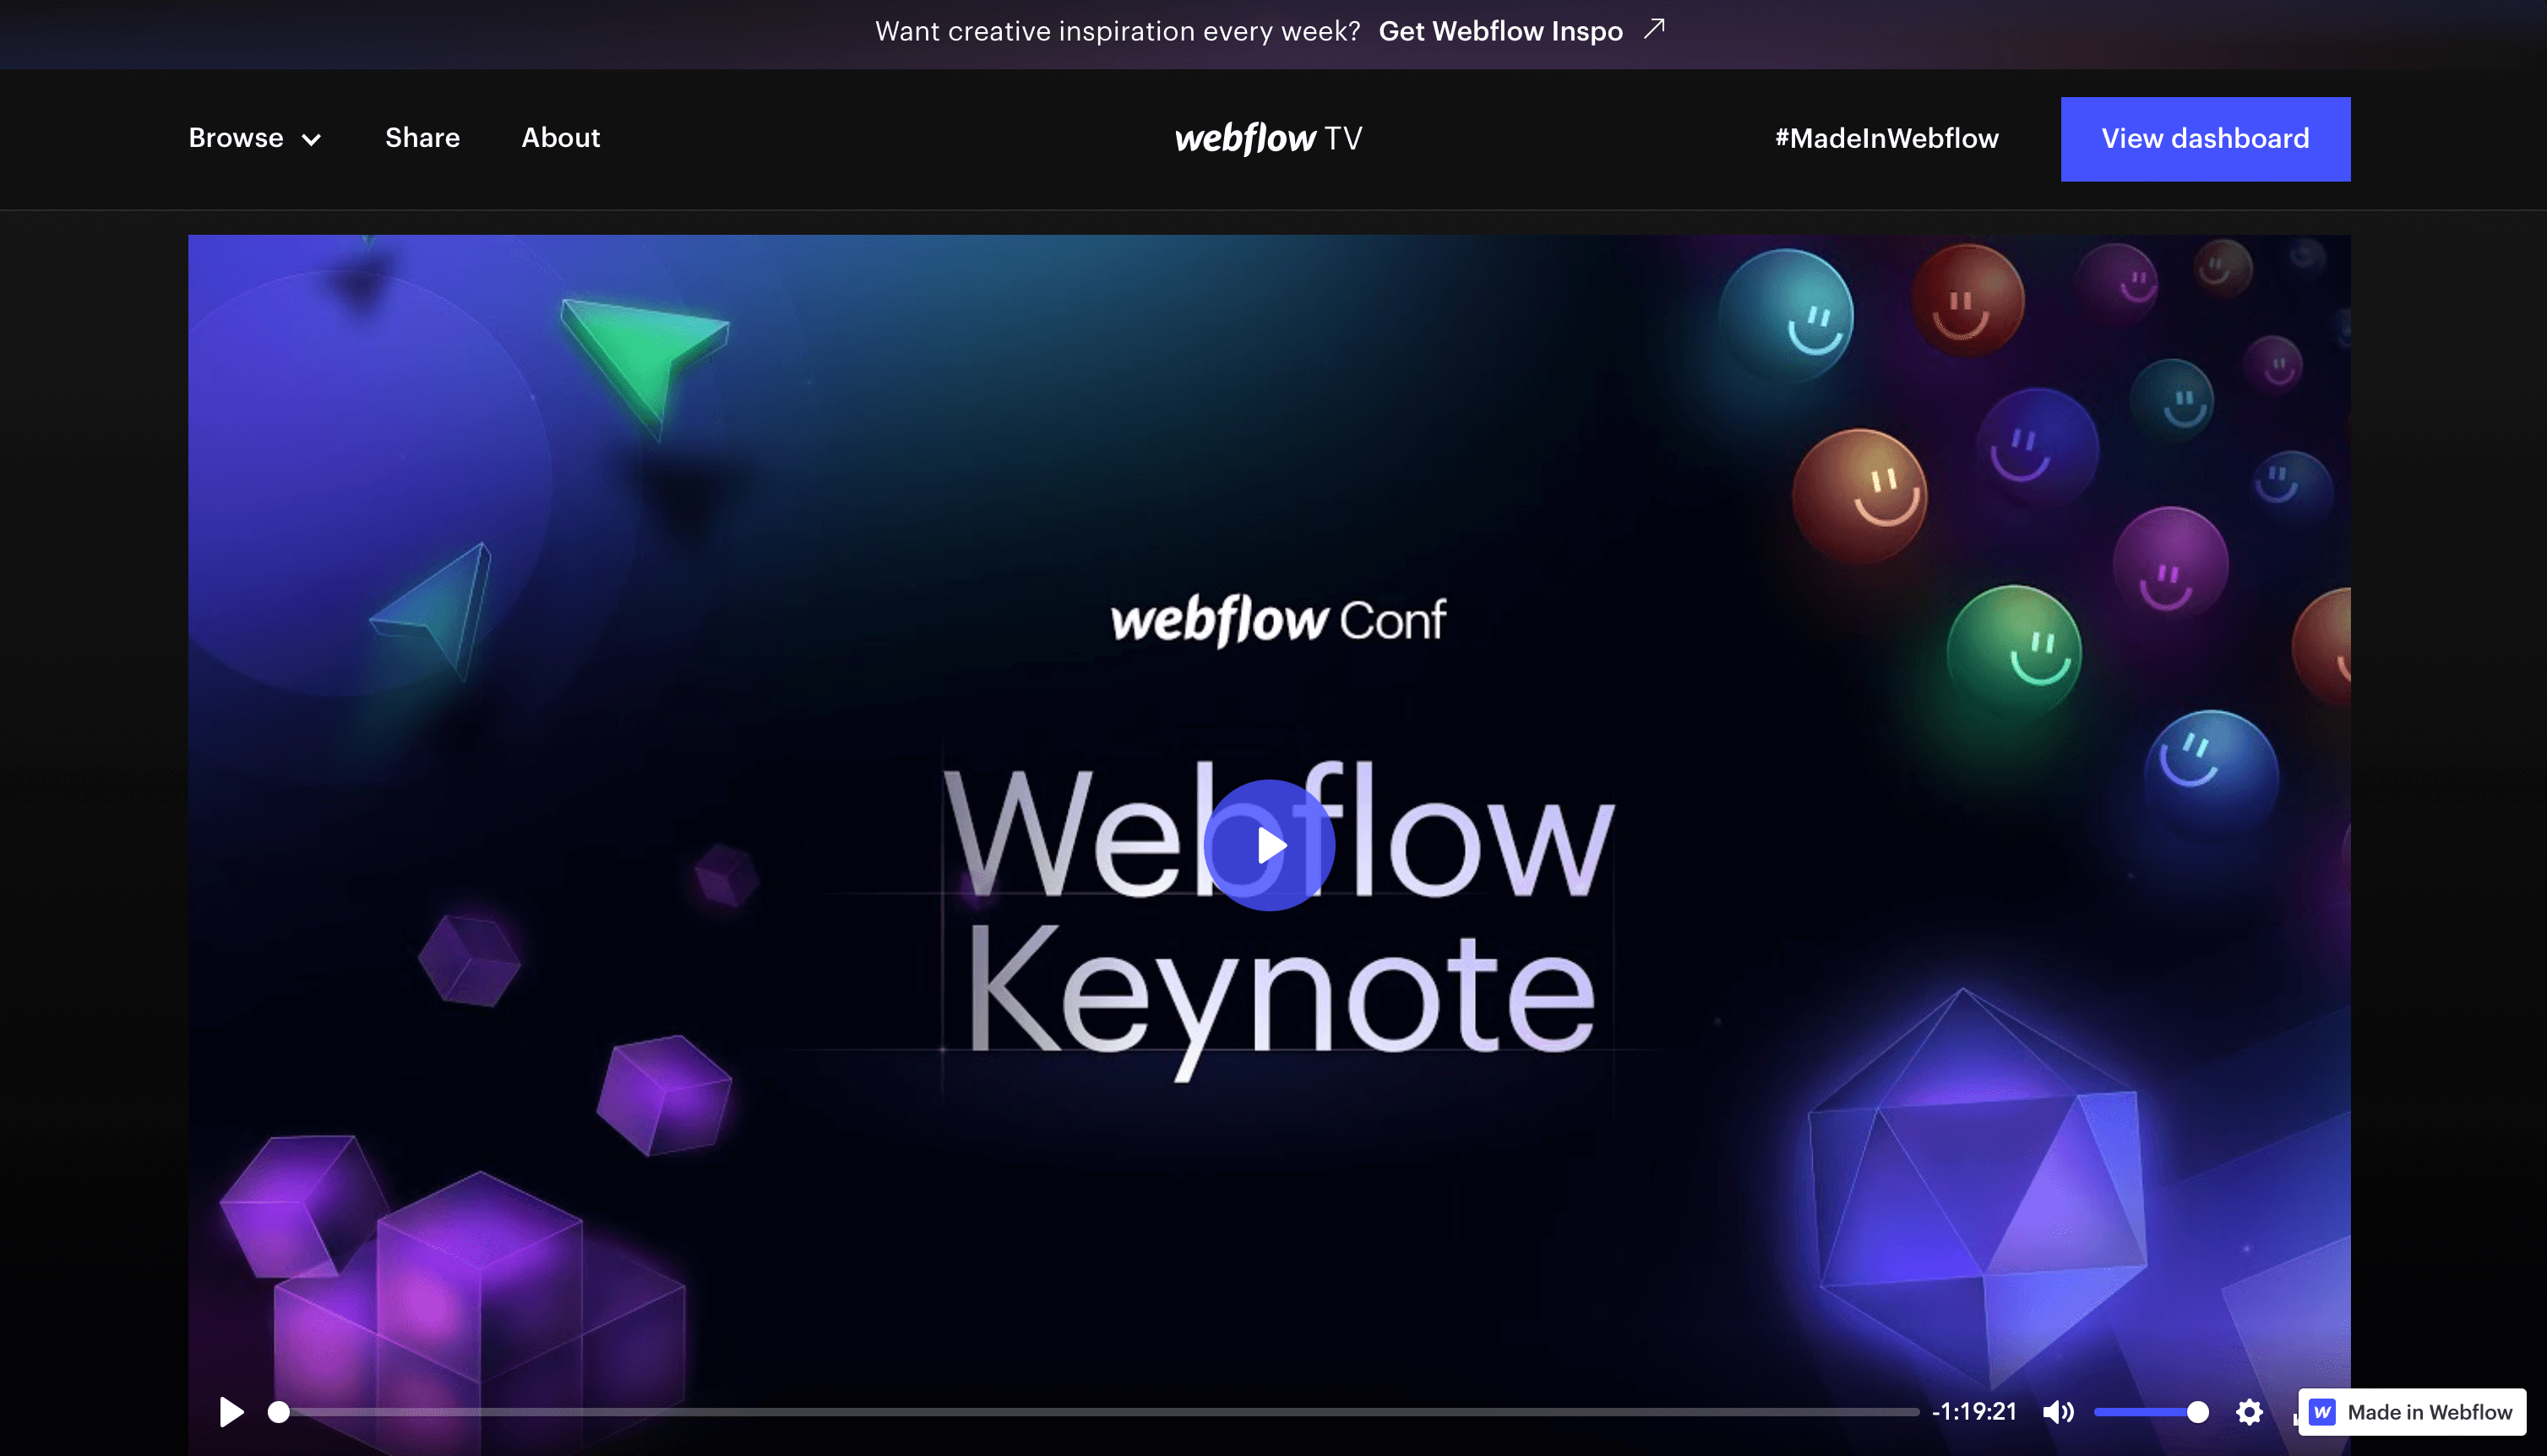 Webflow events